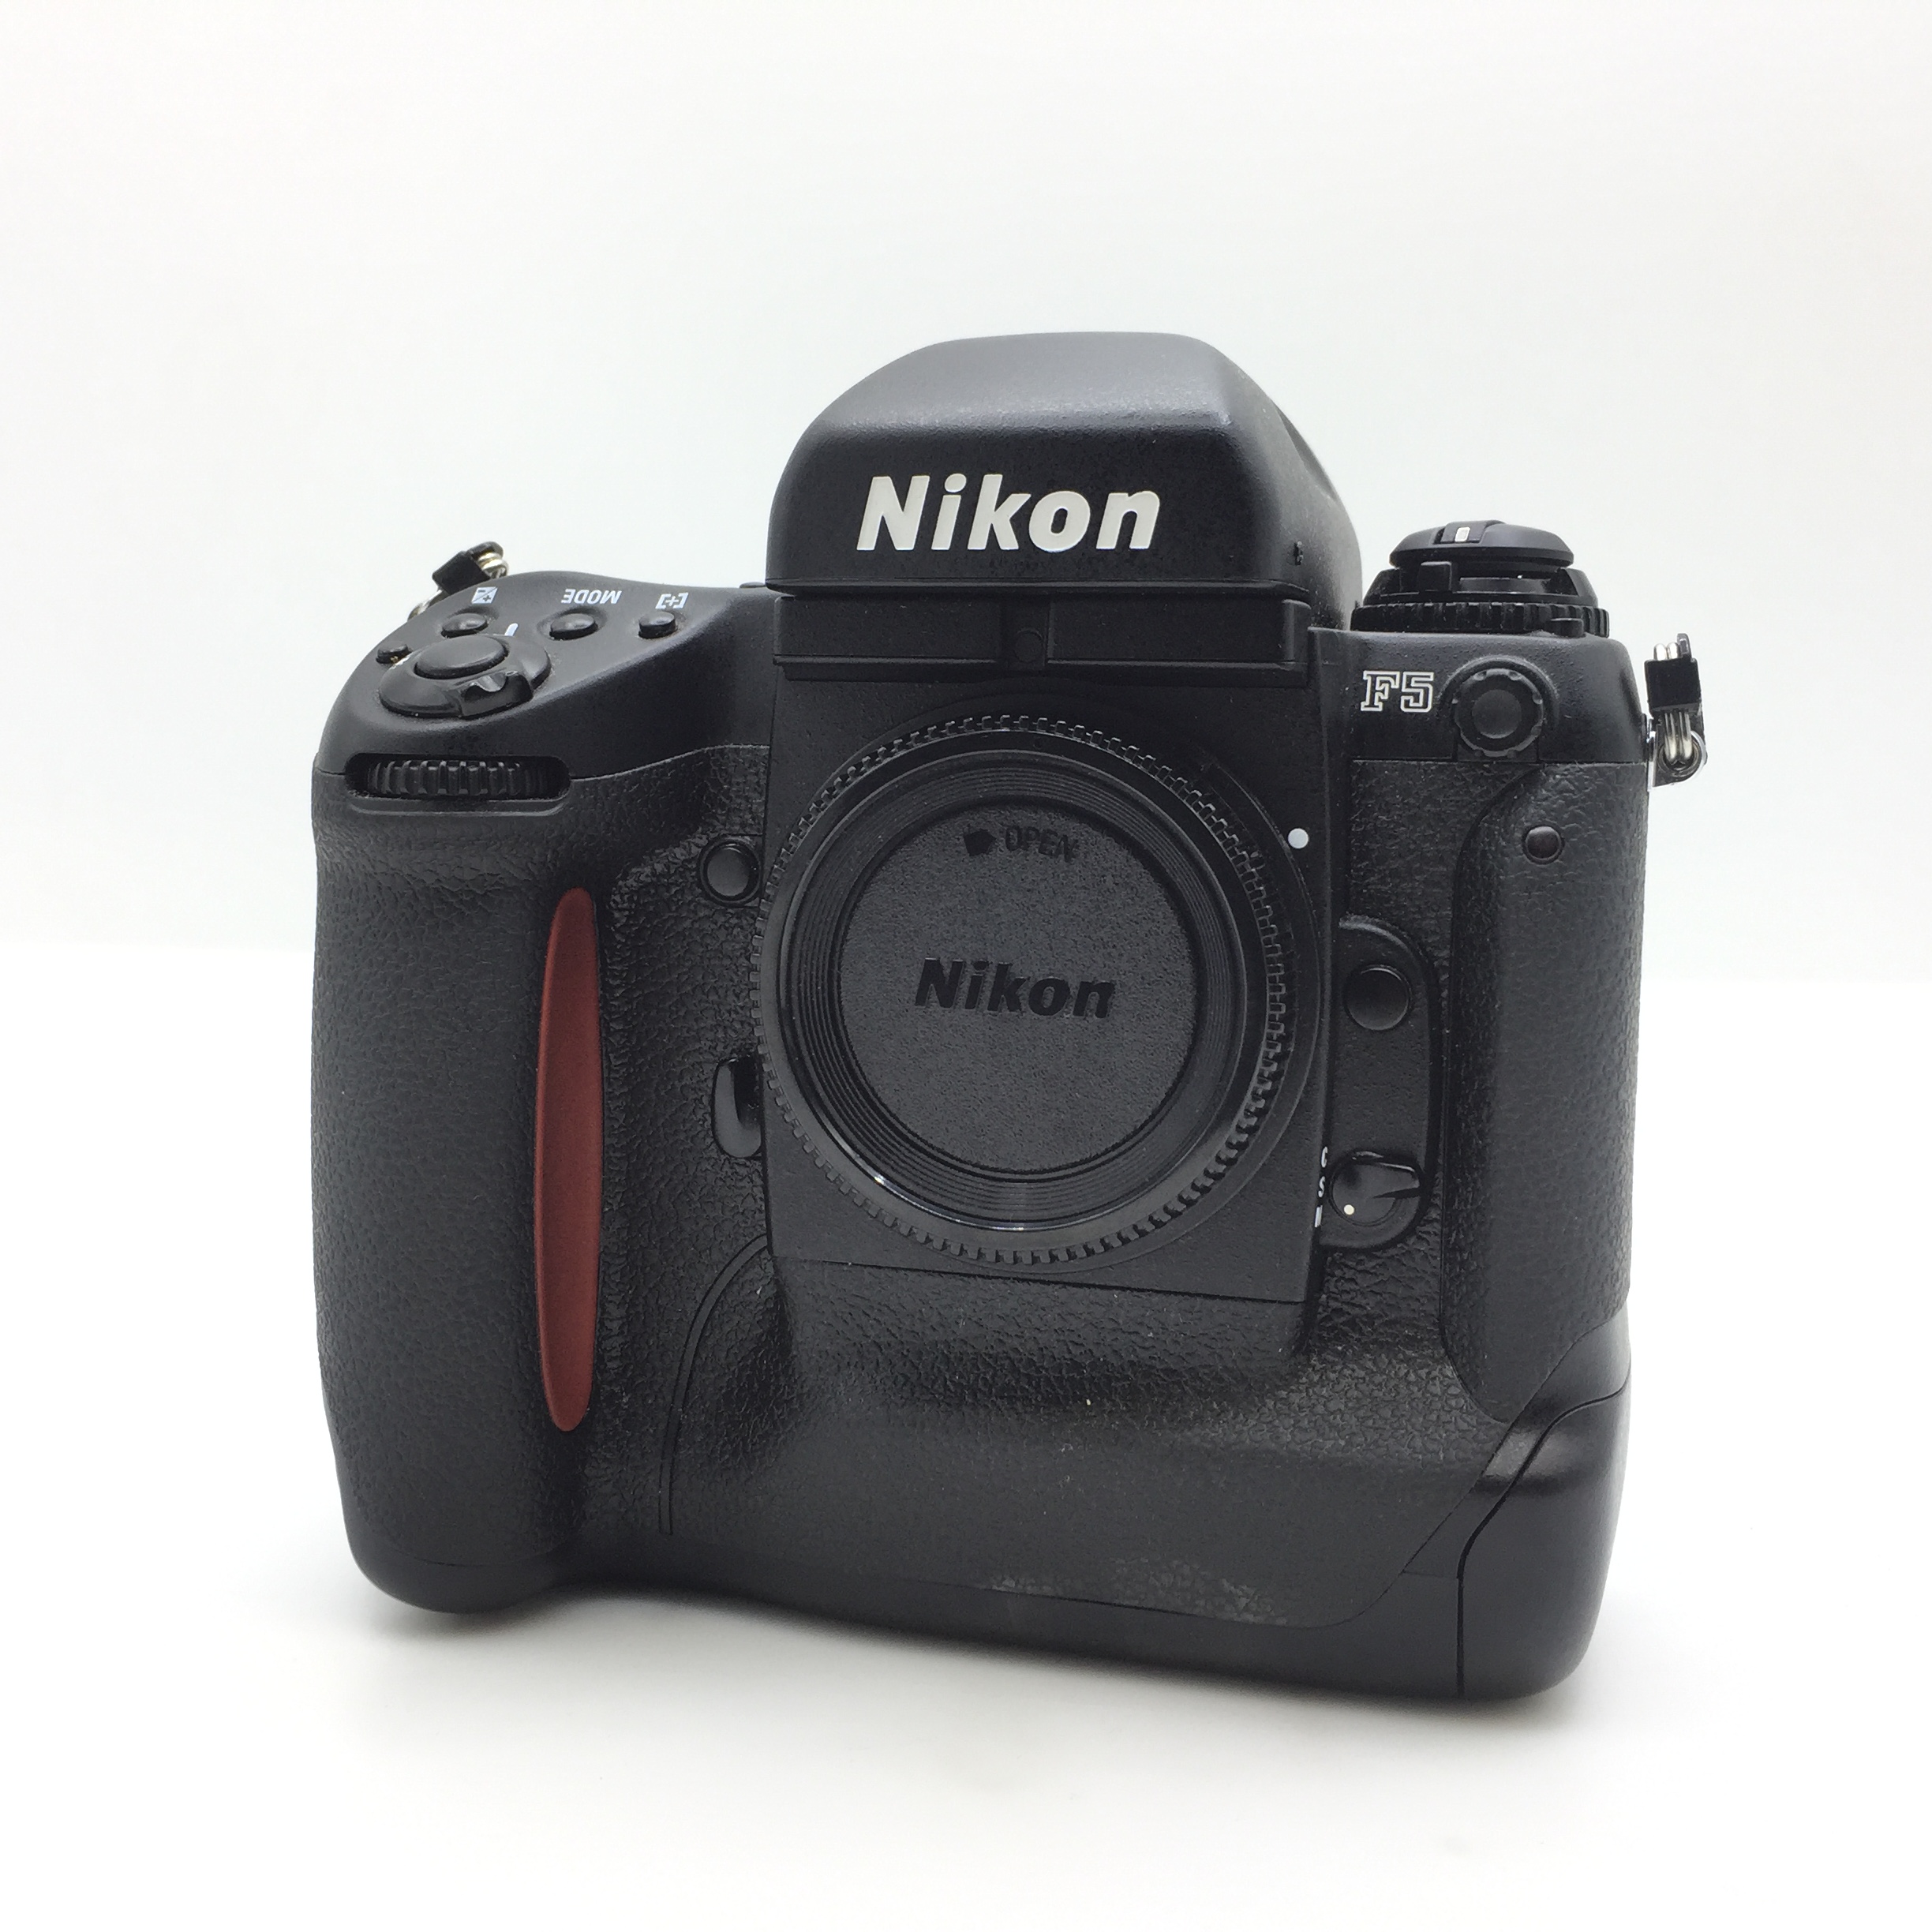 2nd hand Nikon F5 on sale